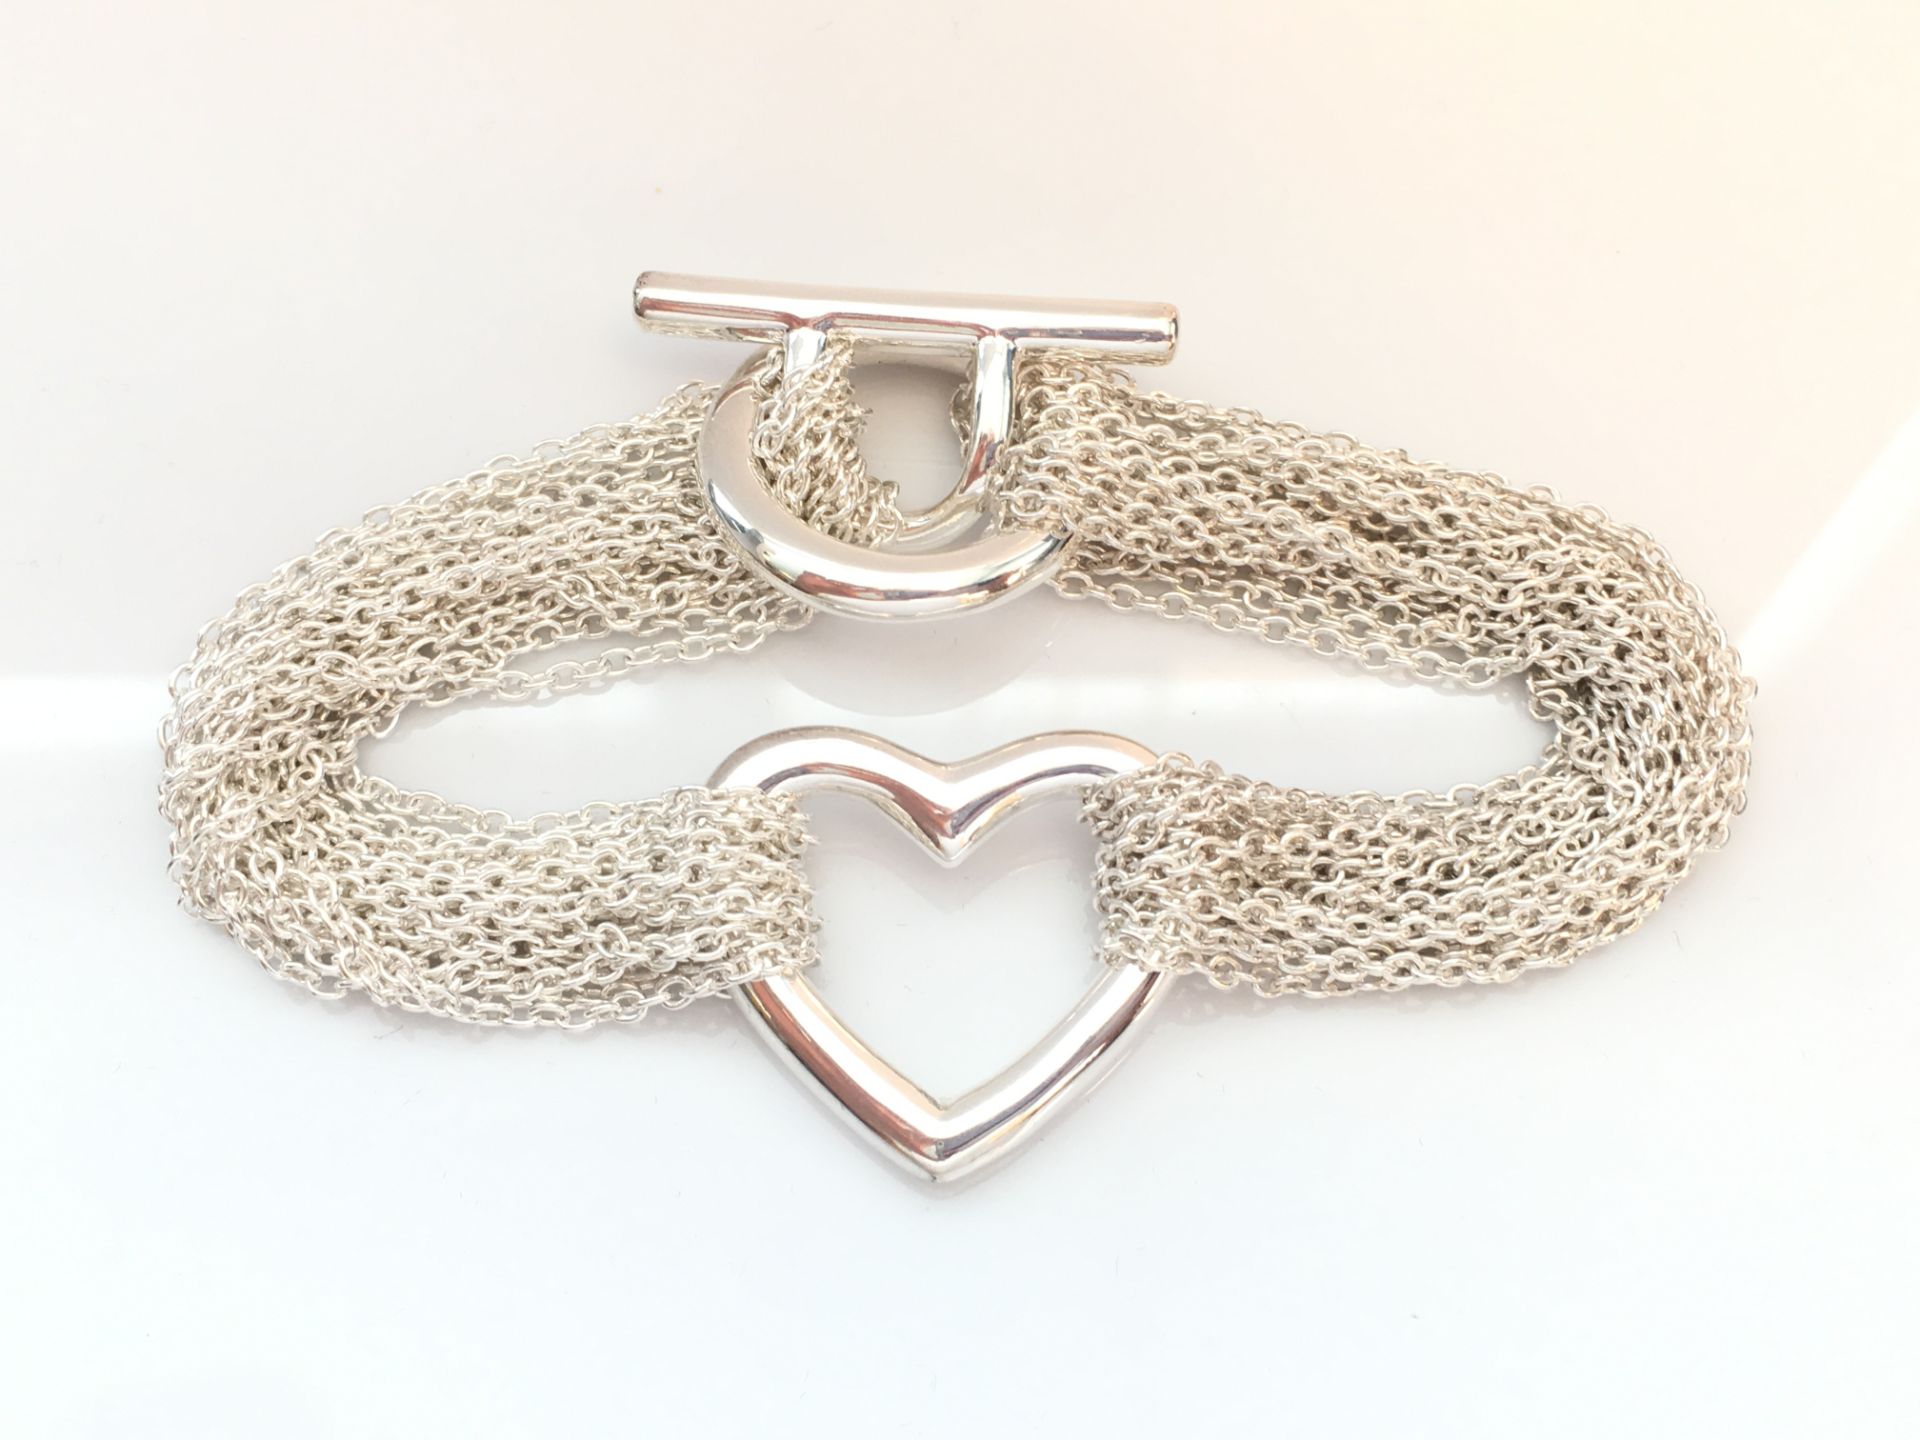 Tiffany Heart shaped Bracelet with bag - Image 3 of 4